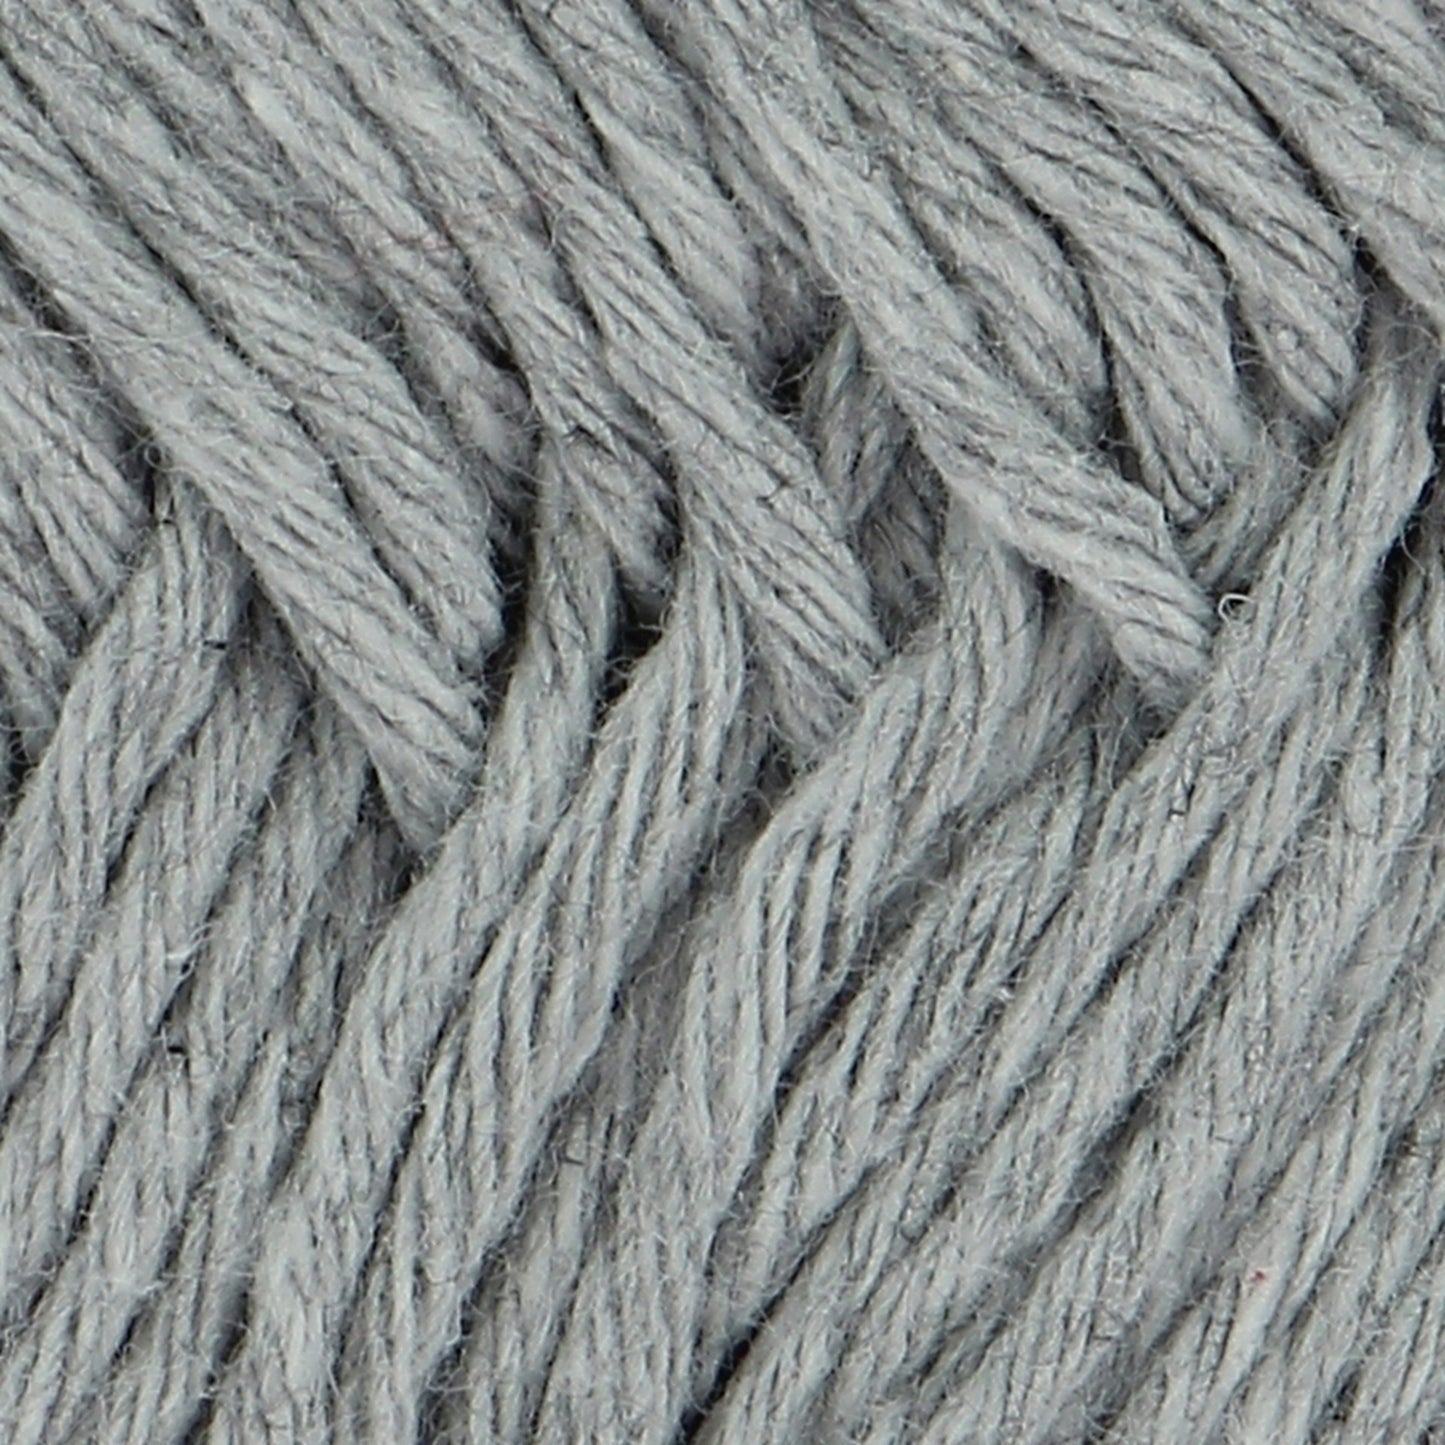 Soft Cotton DK eco New - New York Grey